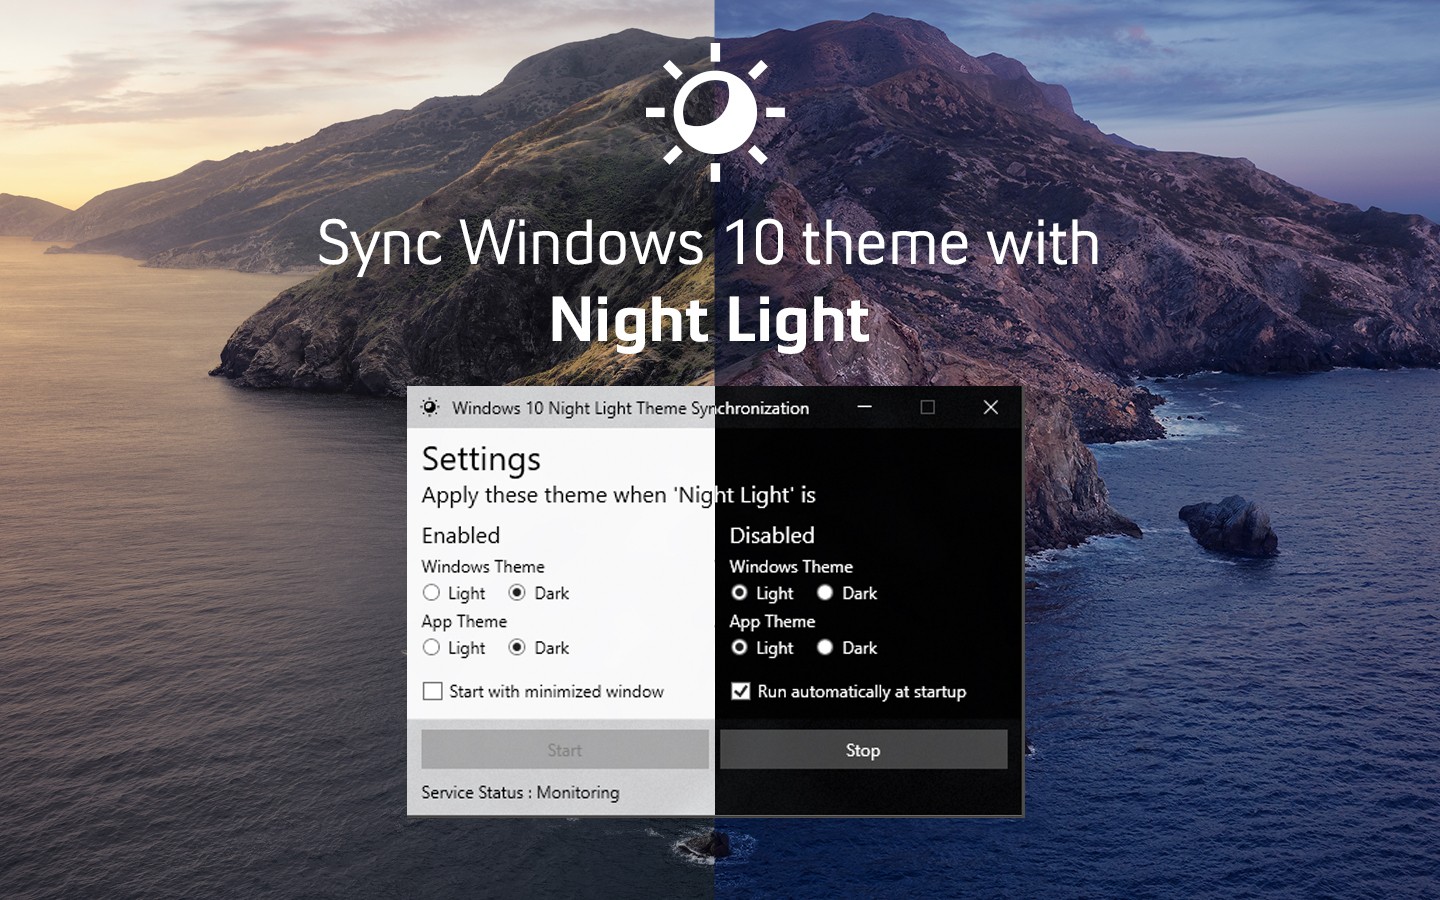 Windows 10 Night Light Theme Synchronization